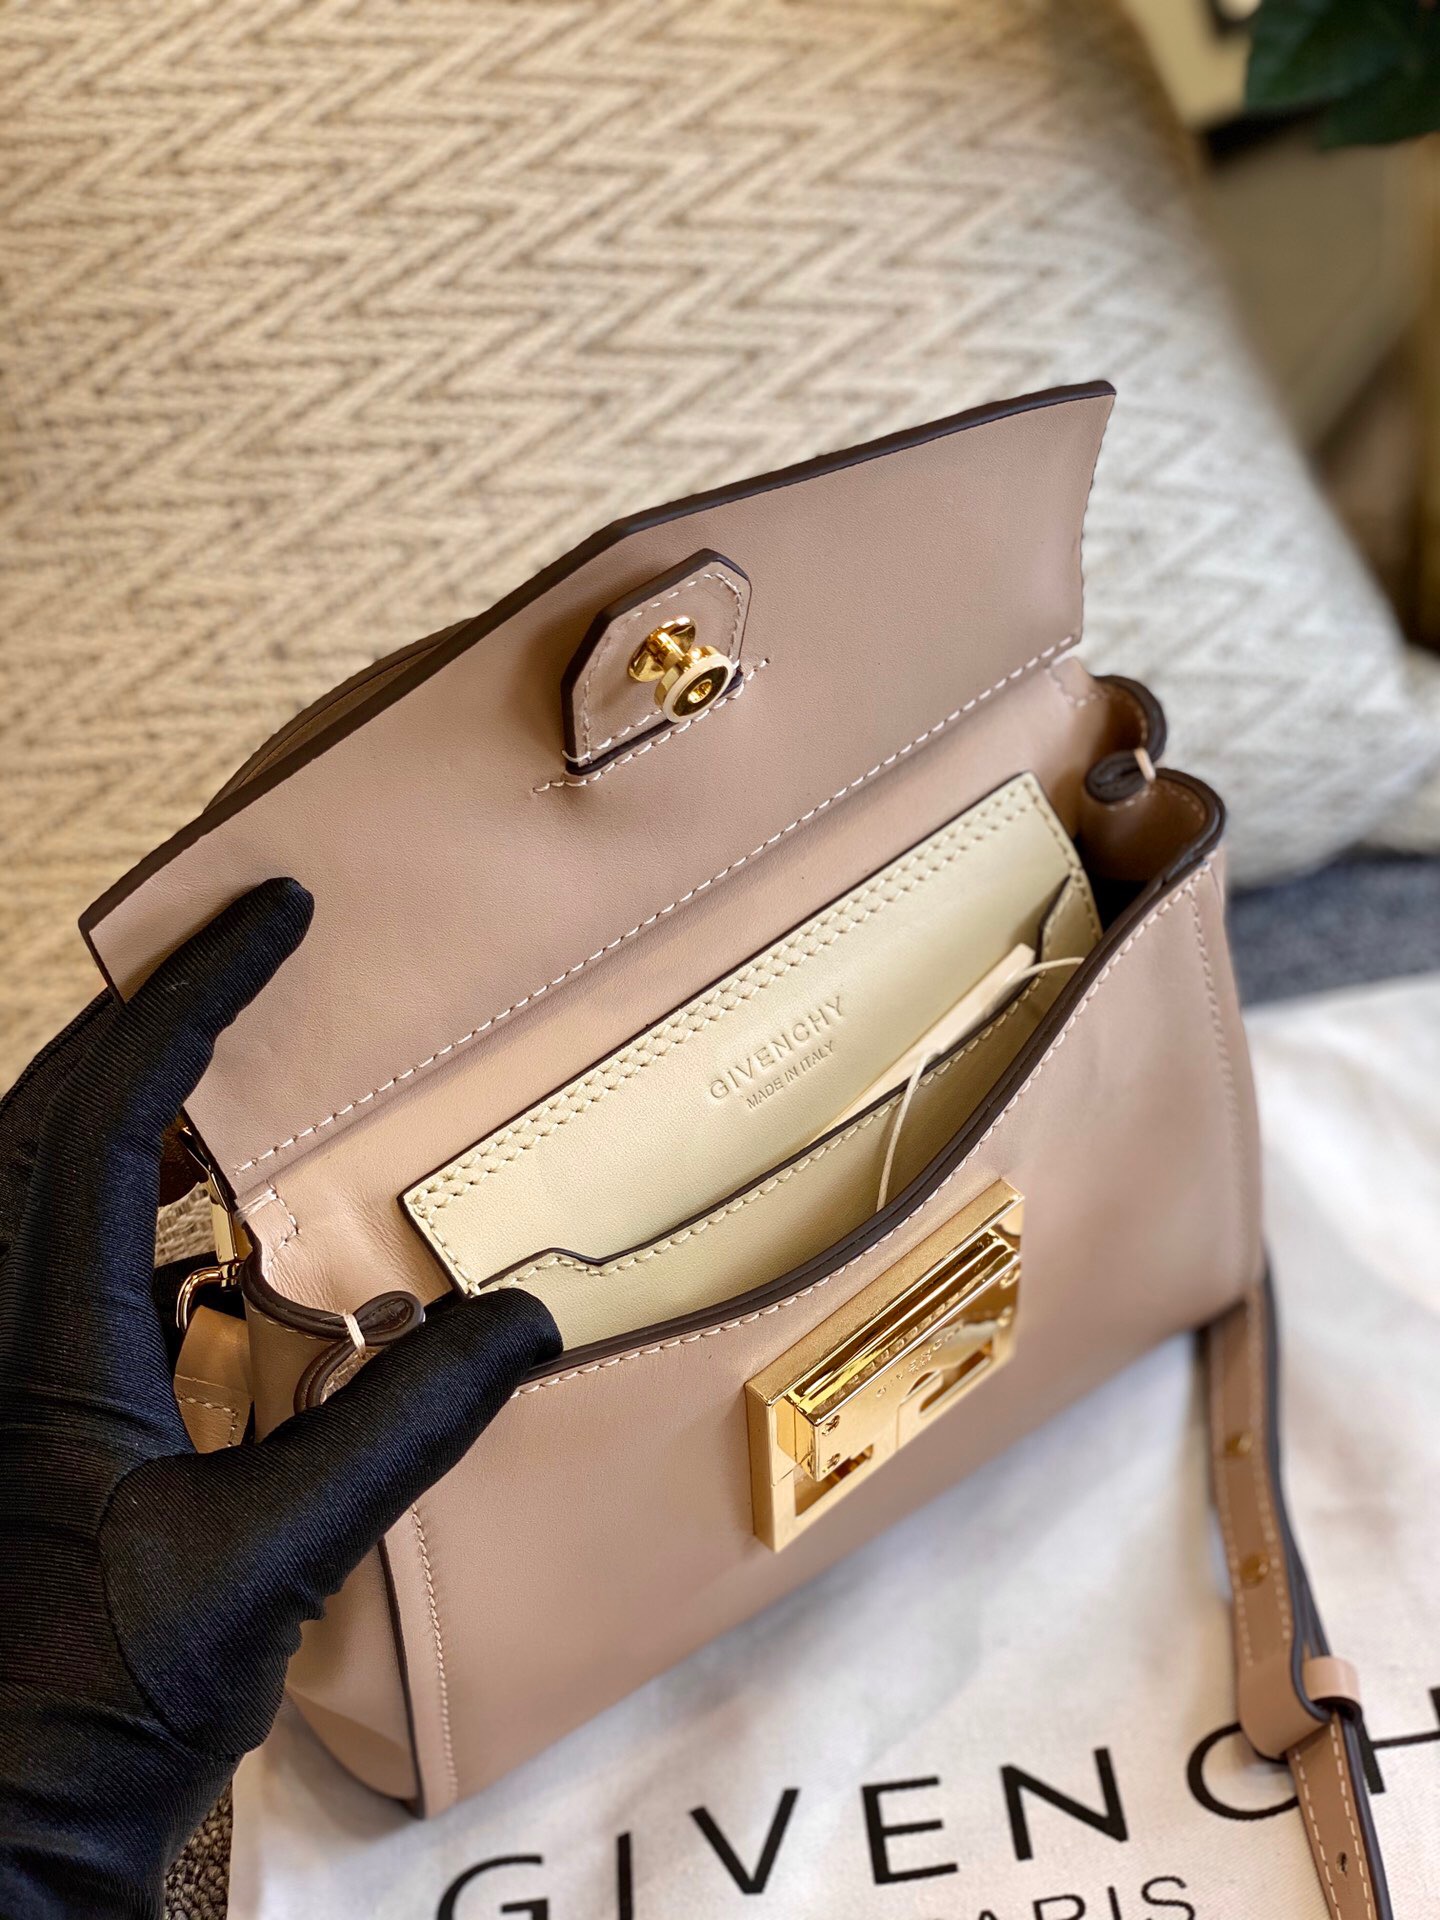 Givenchy Handbags & Purses Made